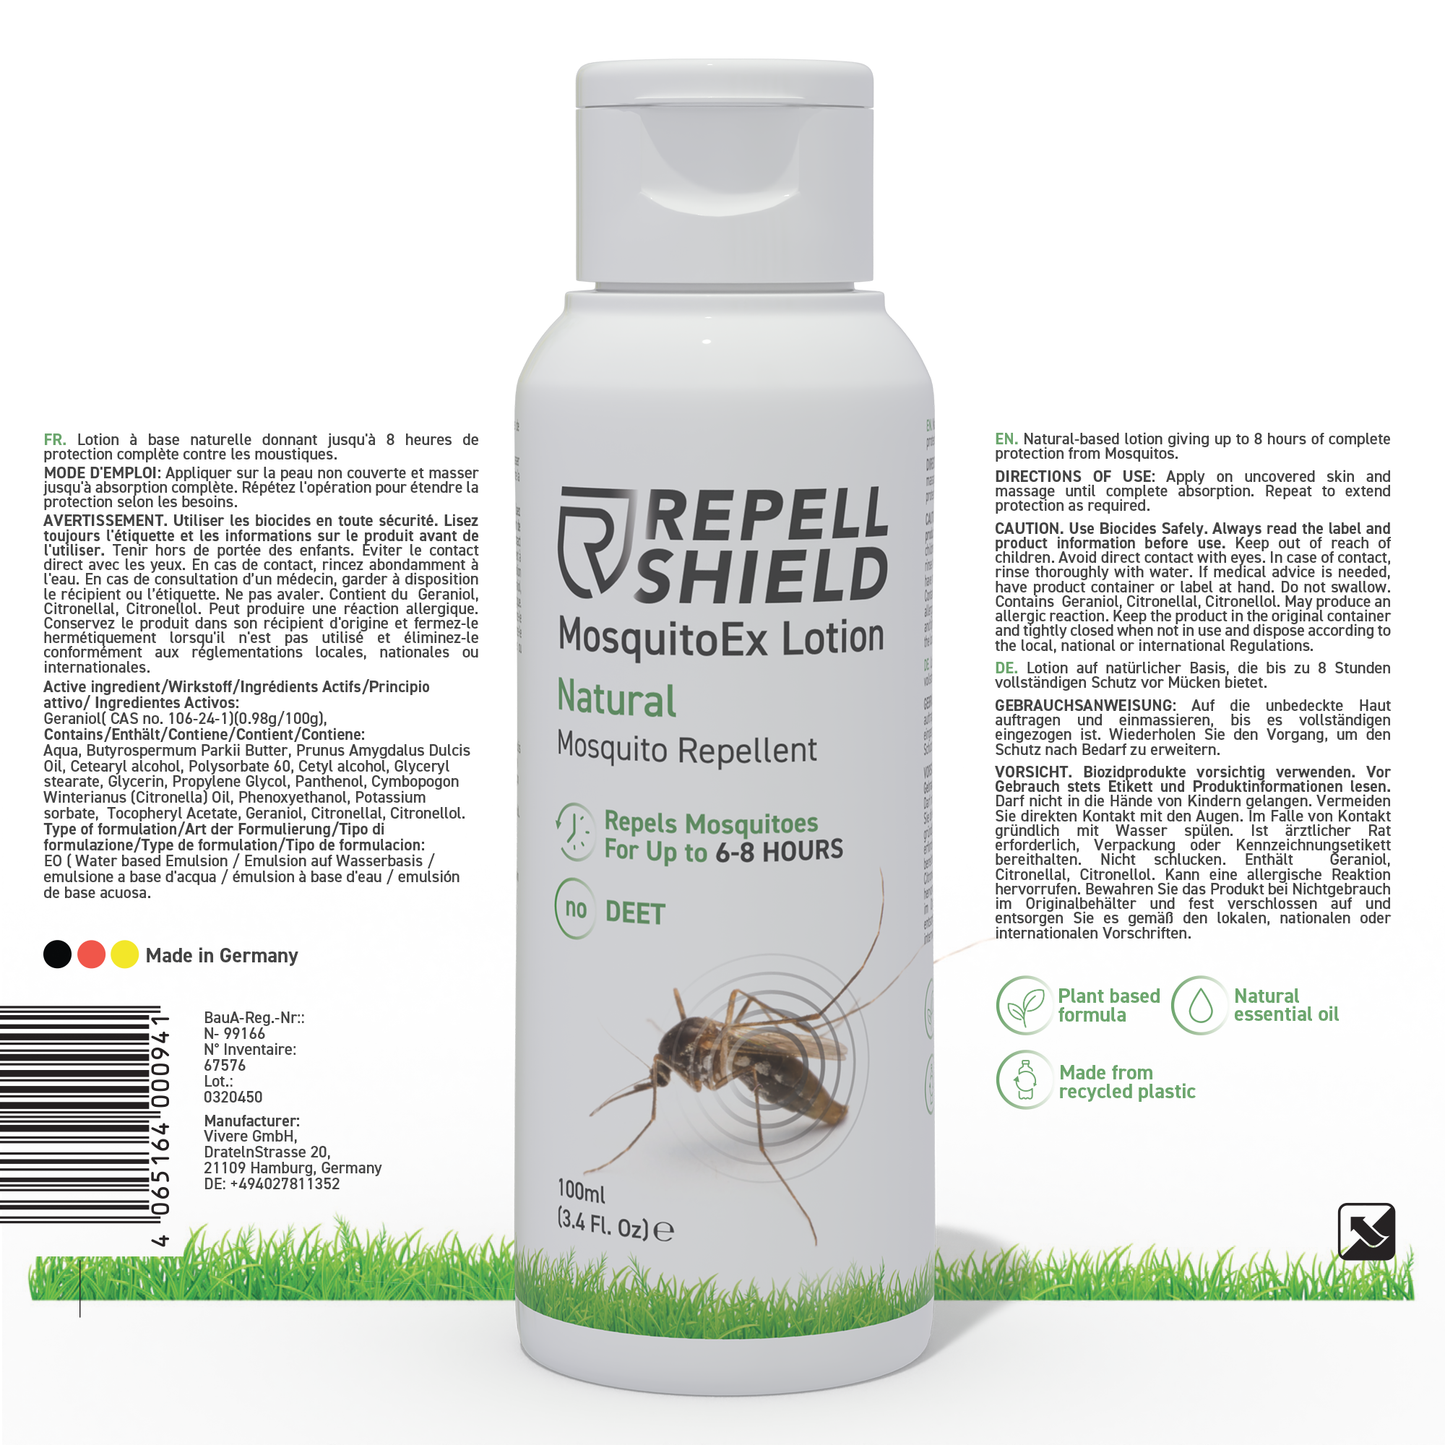 RepellShield Natural Mosquito Repellent, 100ml